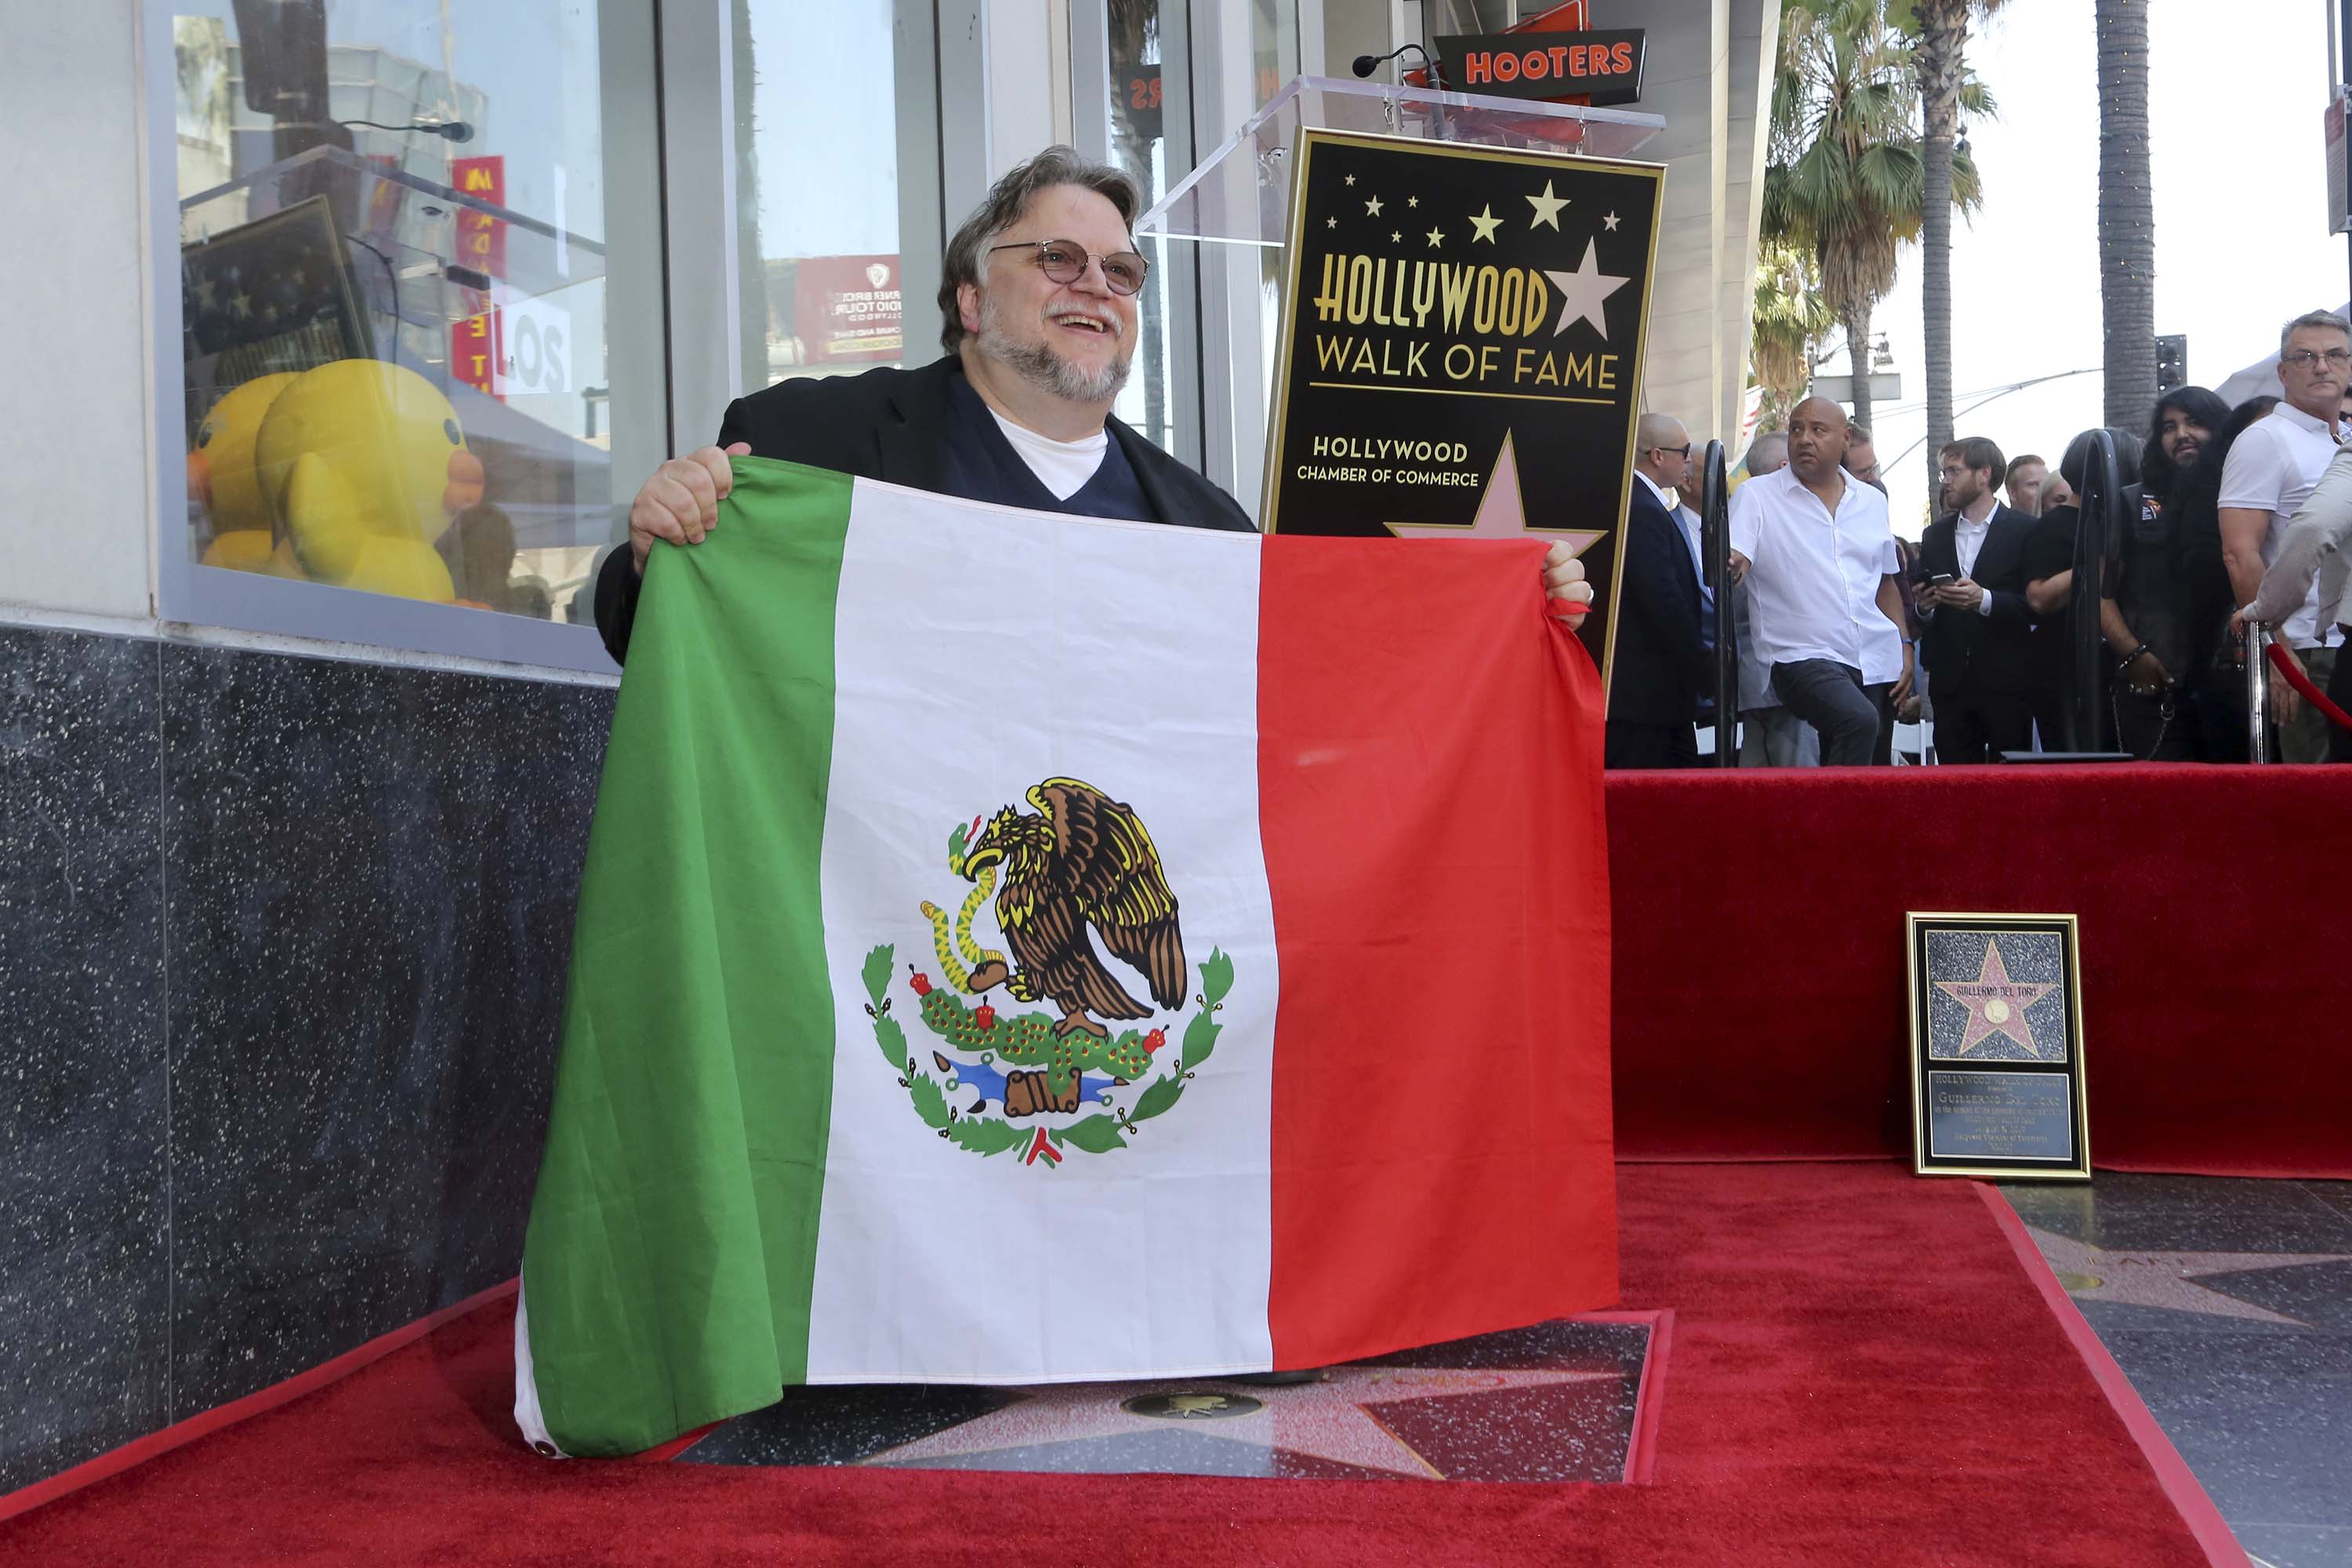 Oscar-winning Mexican filmmaker Guillermo del Toro champions immigrants in Hollywood Walk of Fame speech | CNN